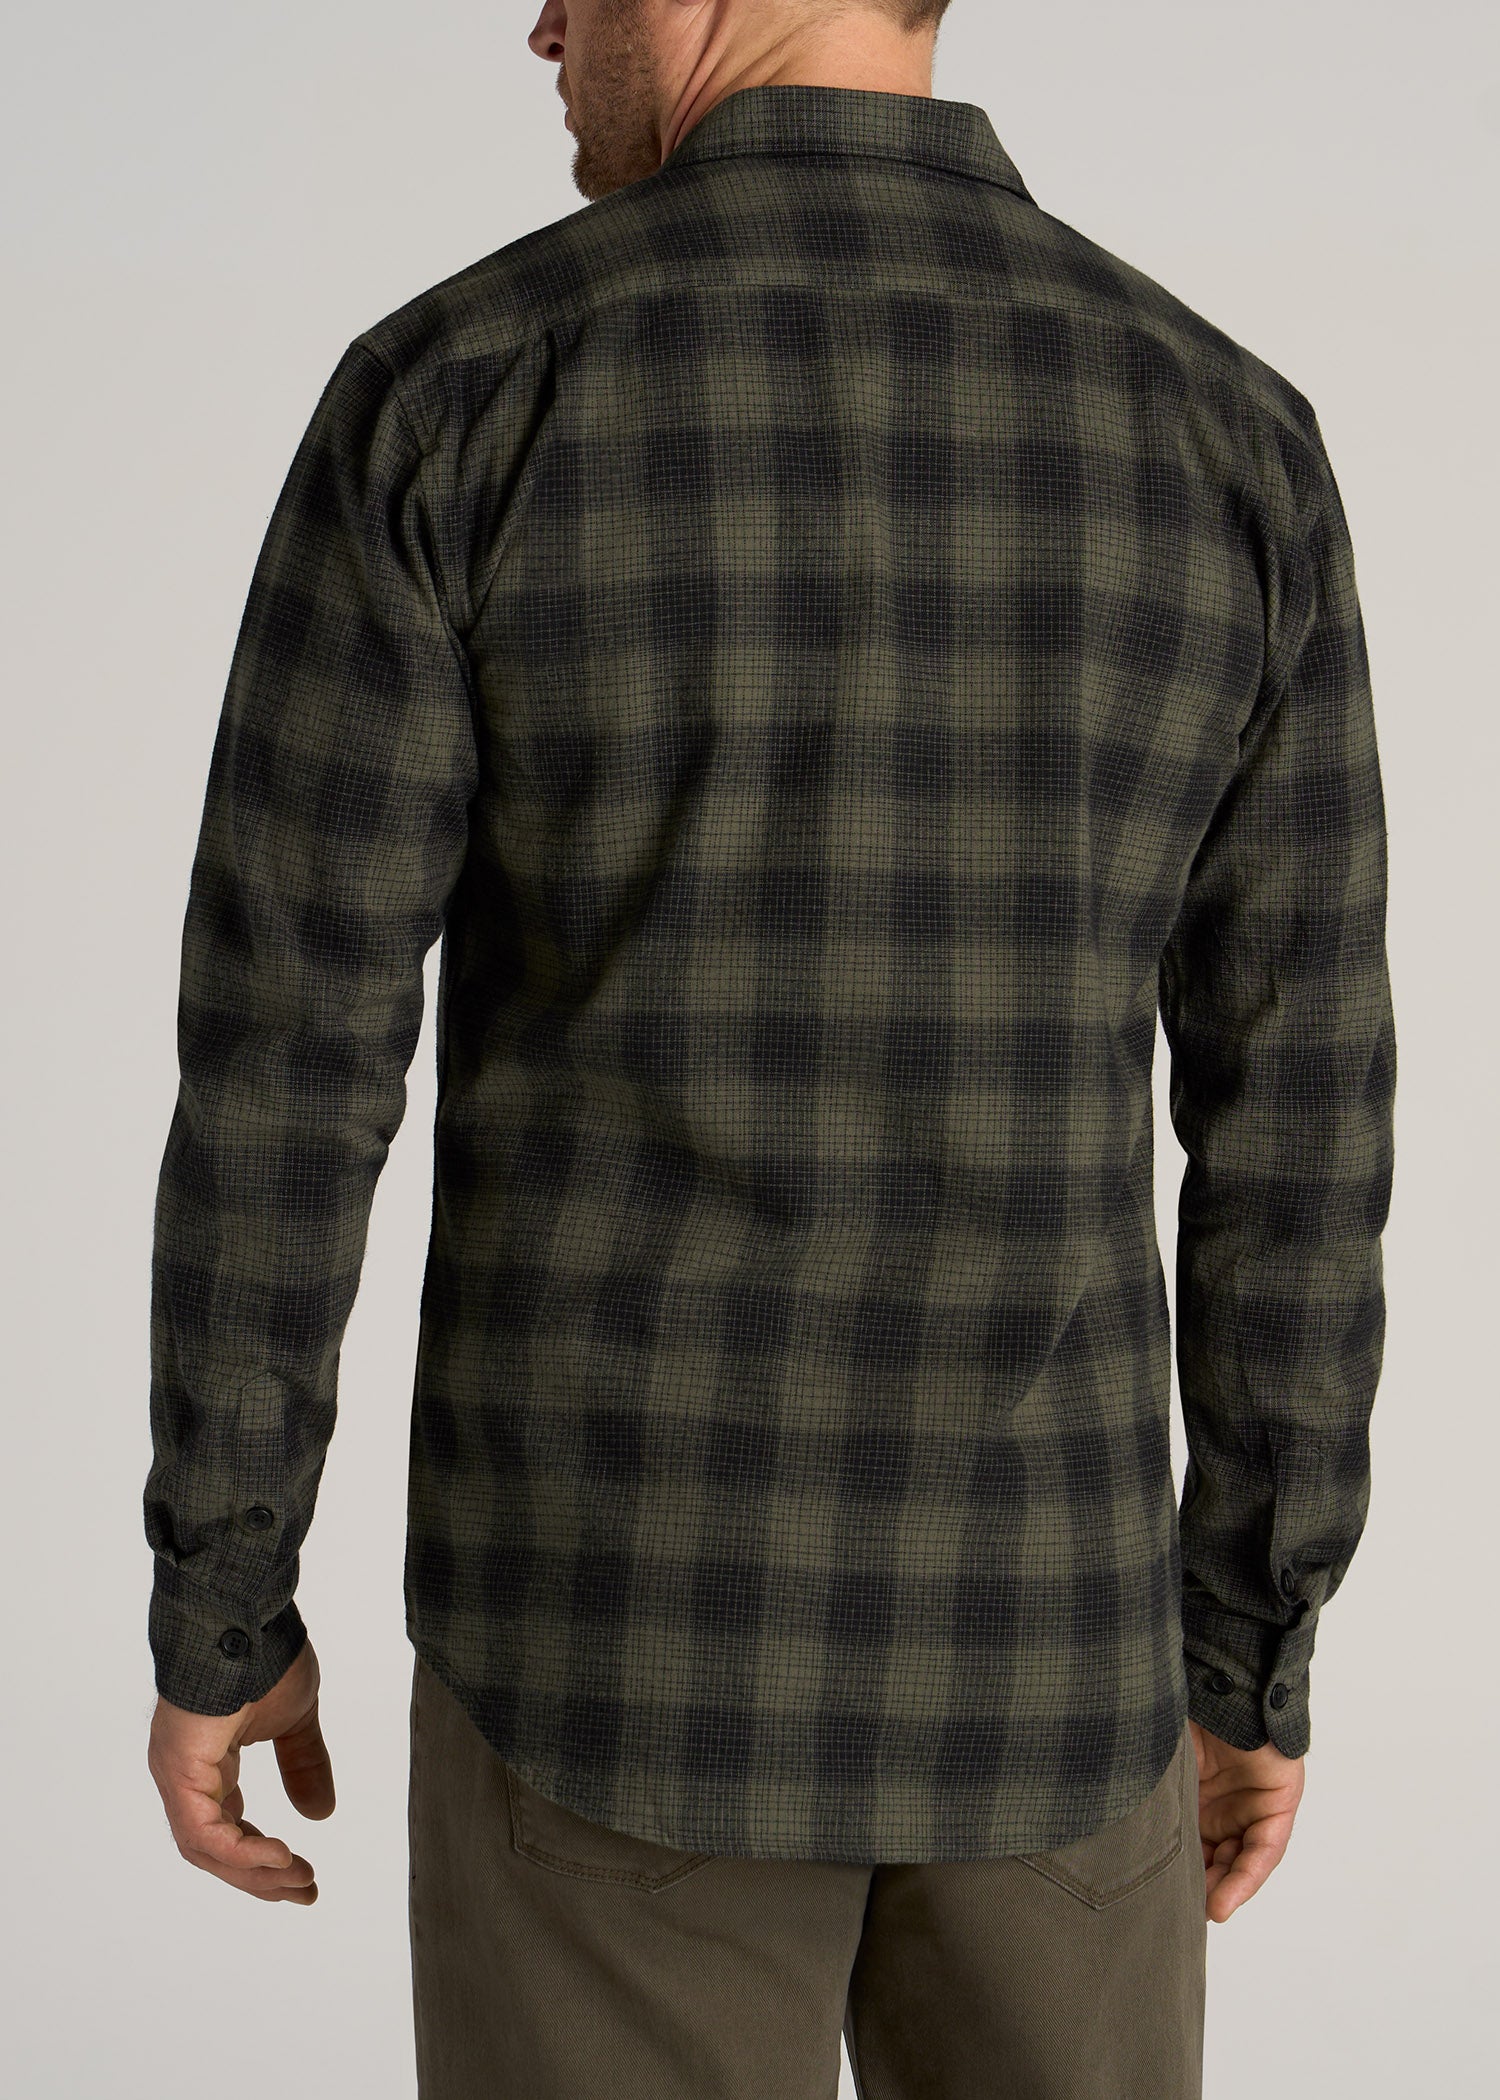 LJ&S Men's Tall Heavy Flannel Shirt in Army Plaid-Black & Surplus Green